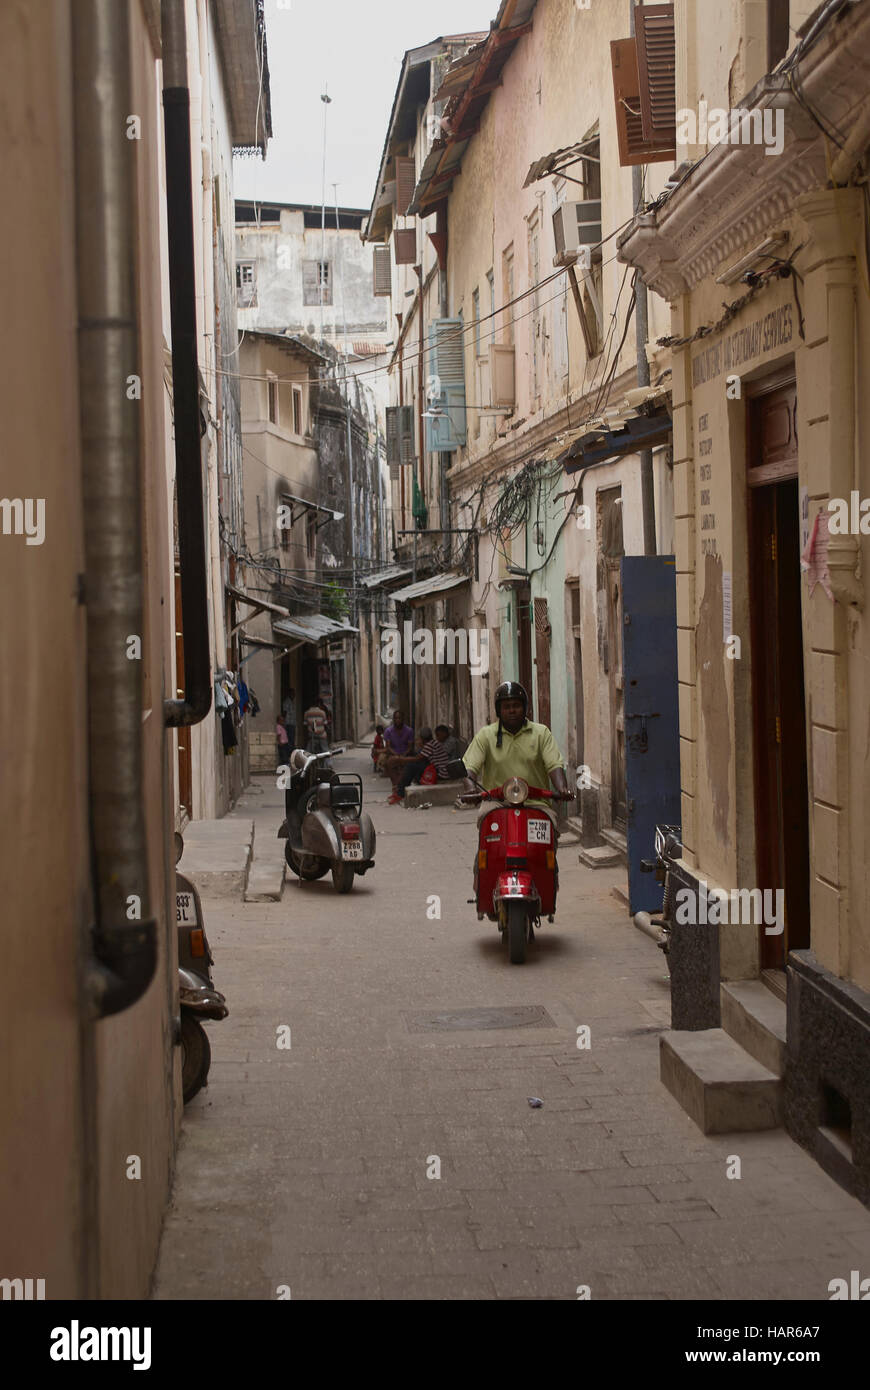 Typical street life in the narrow streets of ancient stone town Zanzibar, Tanzania Stock Photo